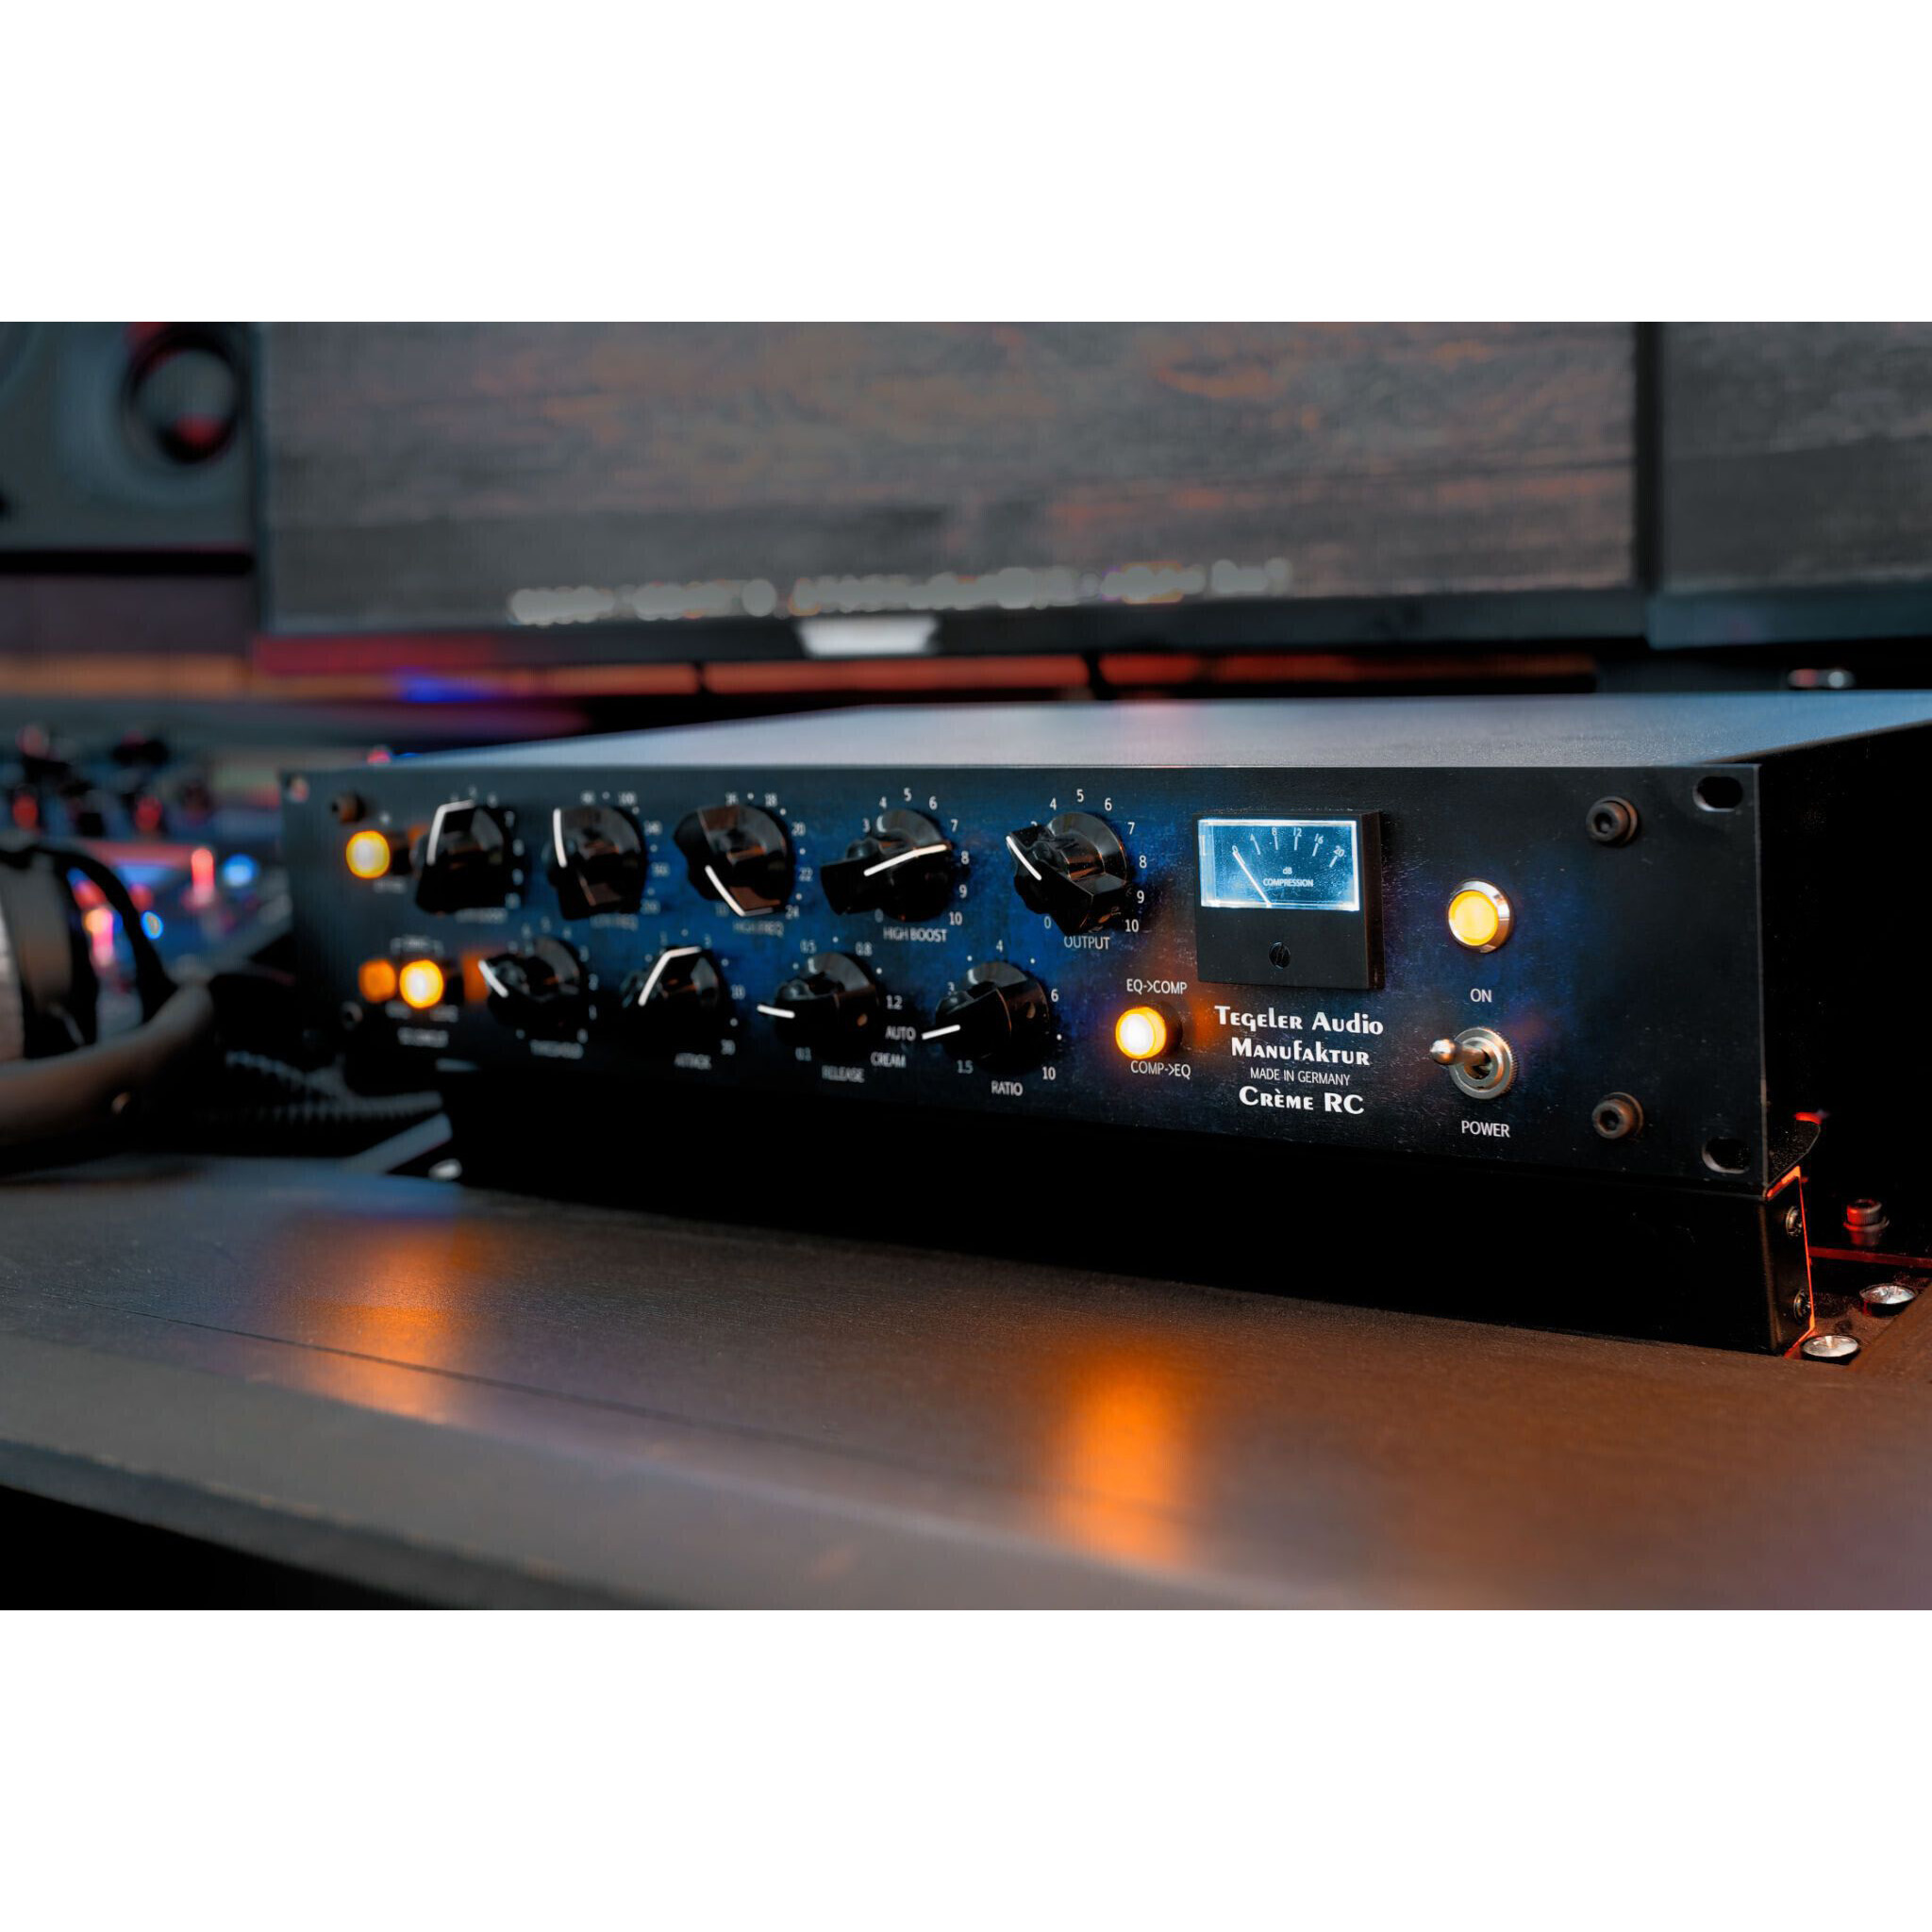 Tegeler Audio Manufaktur Creme RC Частотная обработка звука